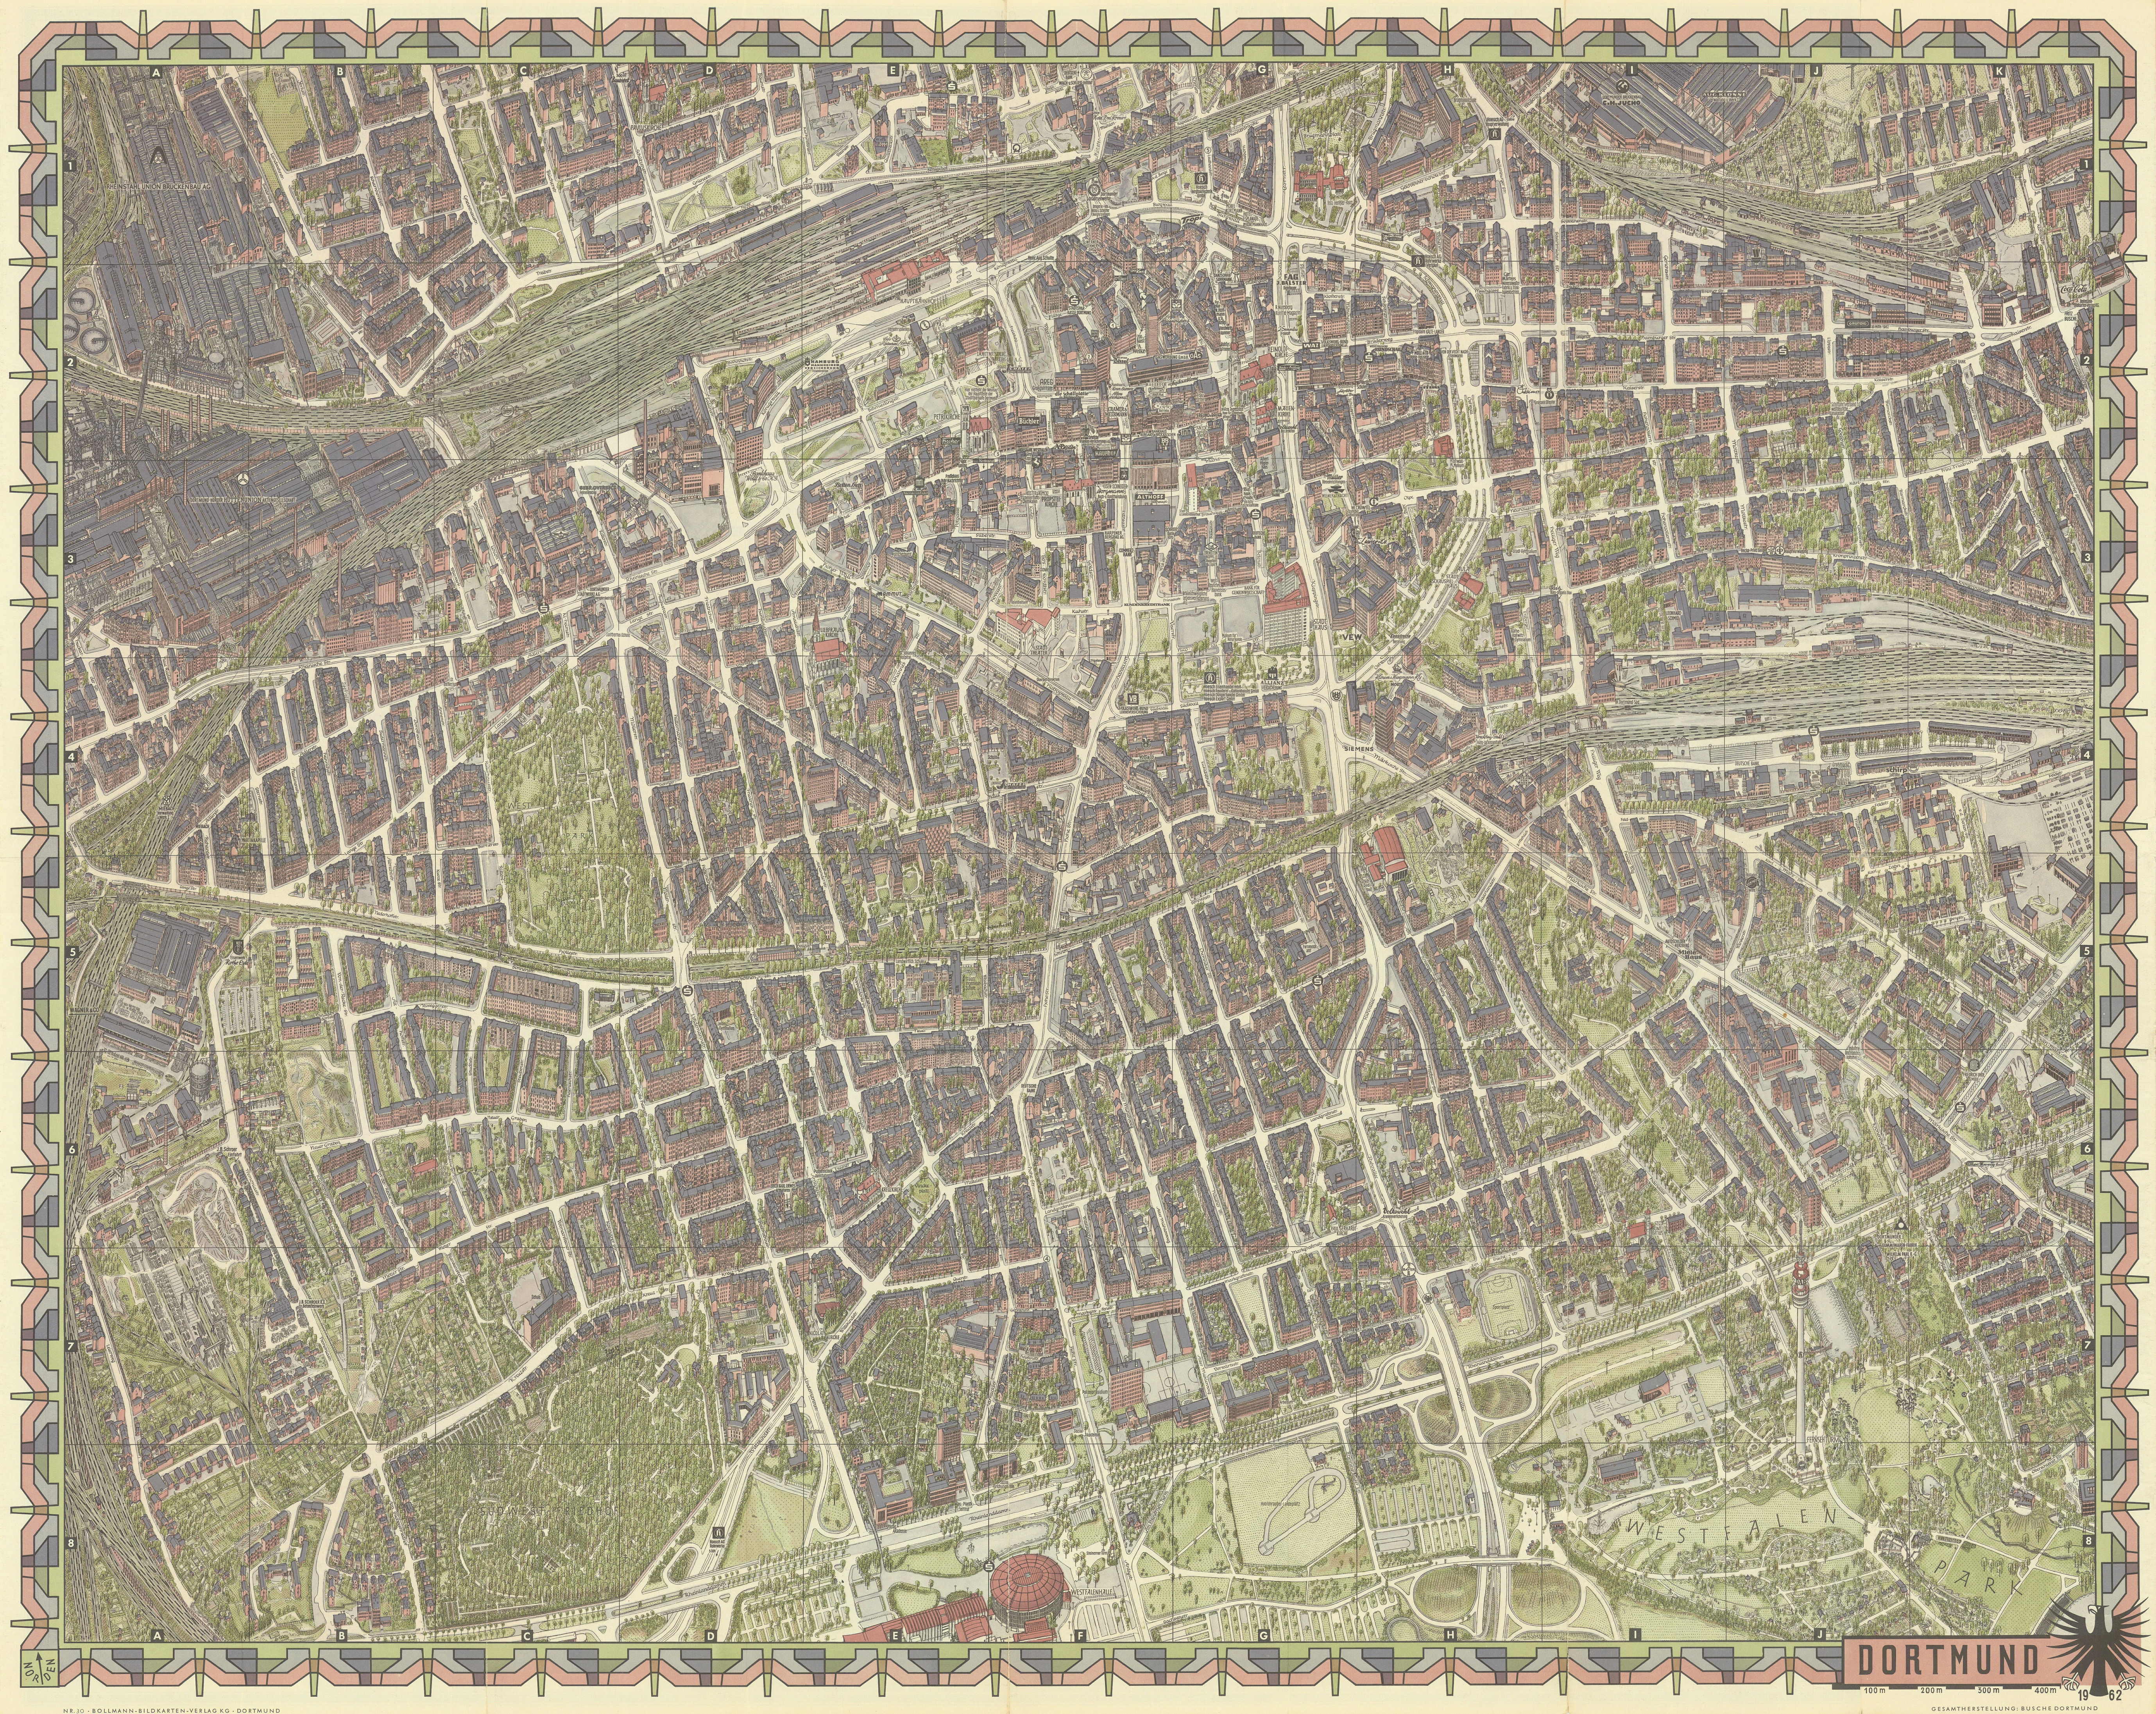 Associate Product Dortmund pictorial bird's eye view city plan by Hermann Bollmann 1962 old map